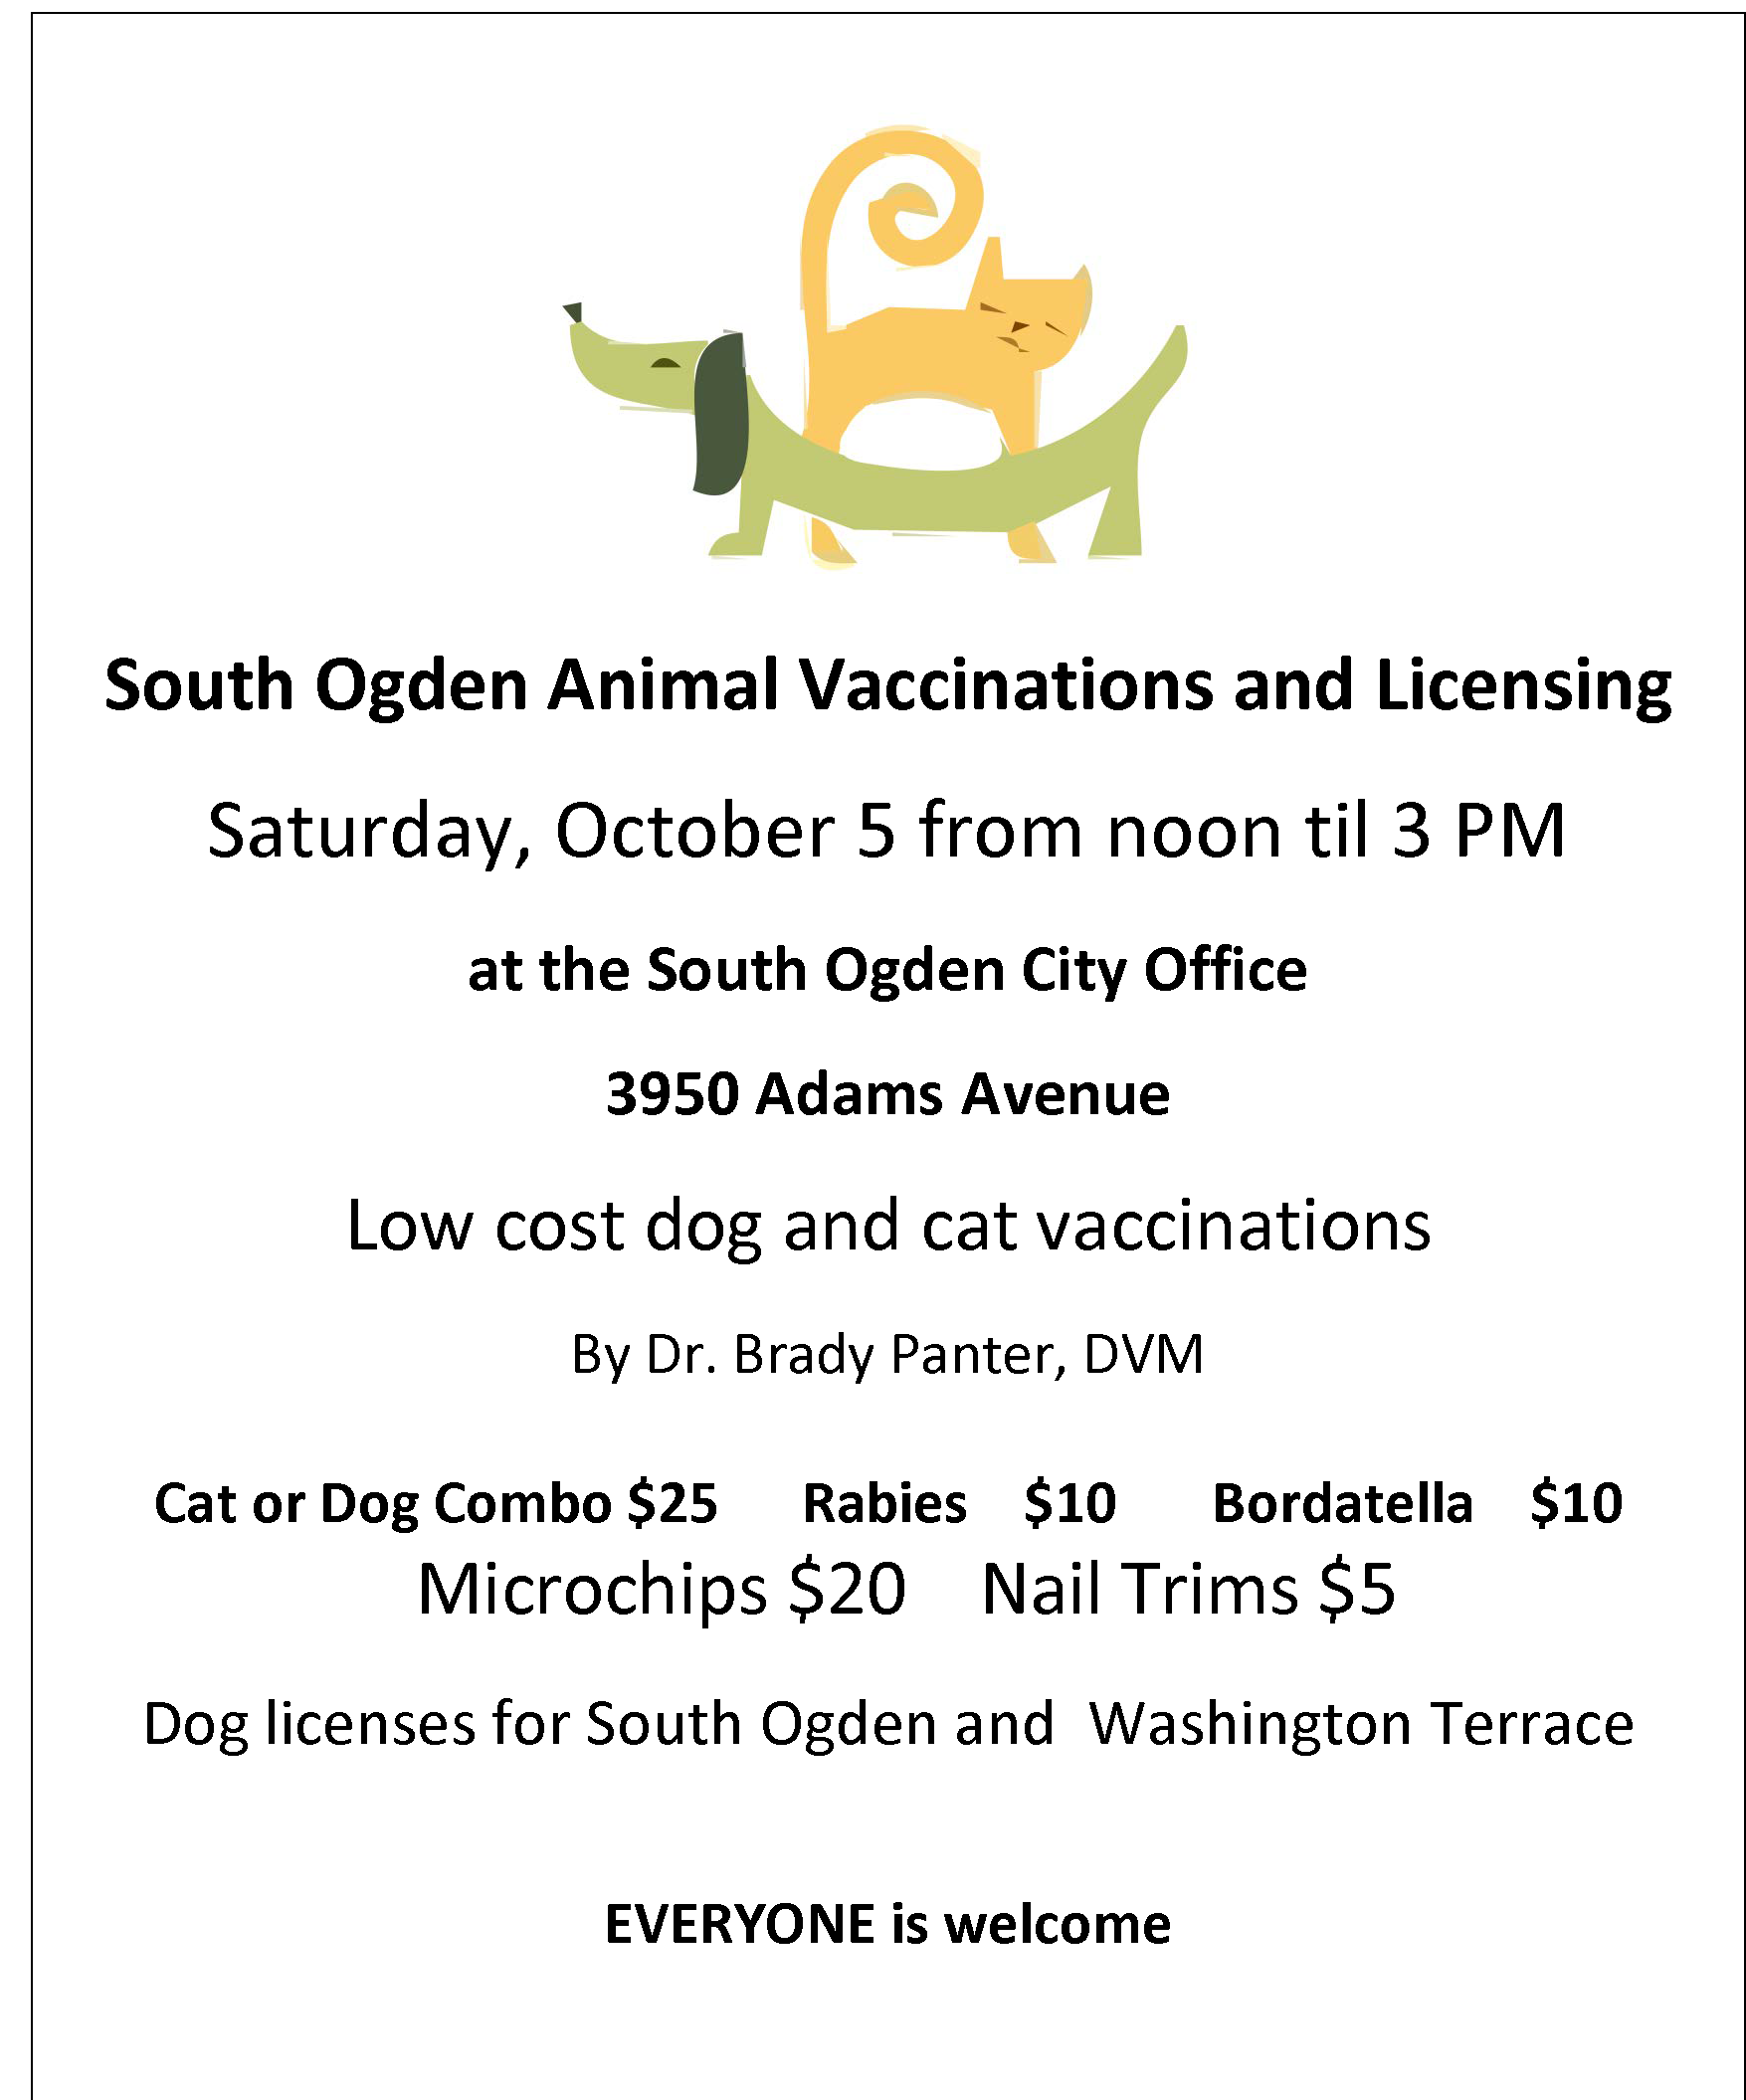 South Ogden Vaccination Clinic flyer 2019 - Copy (2)